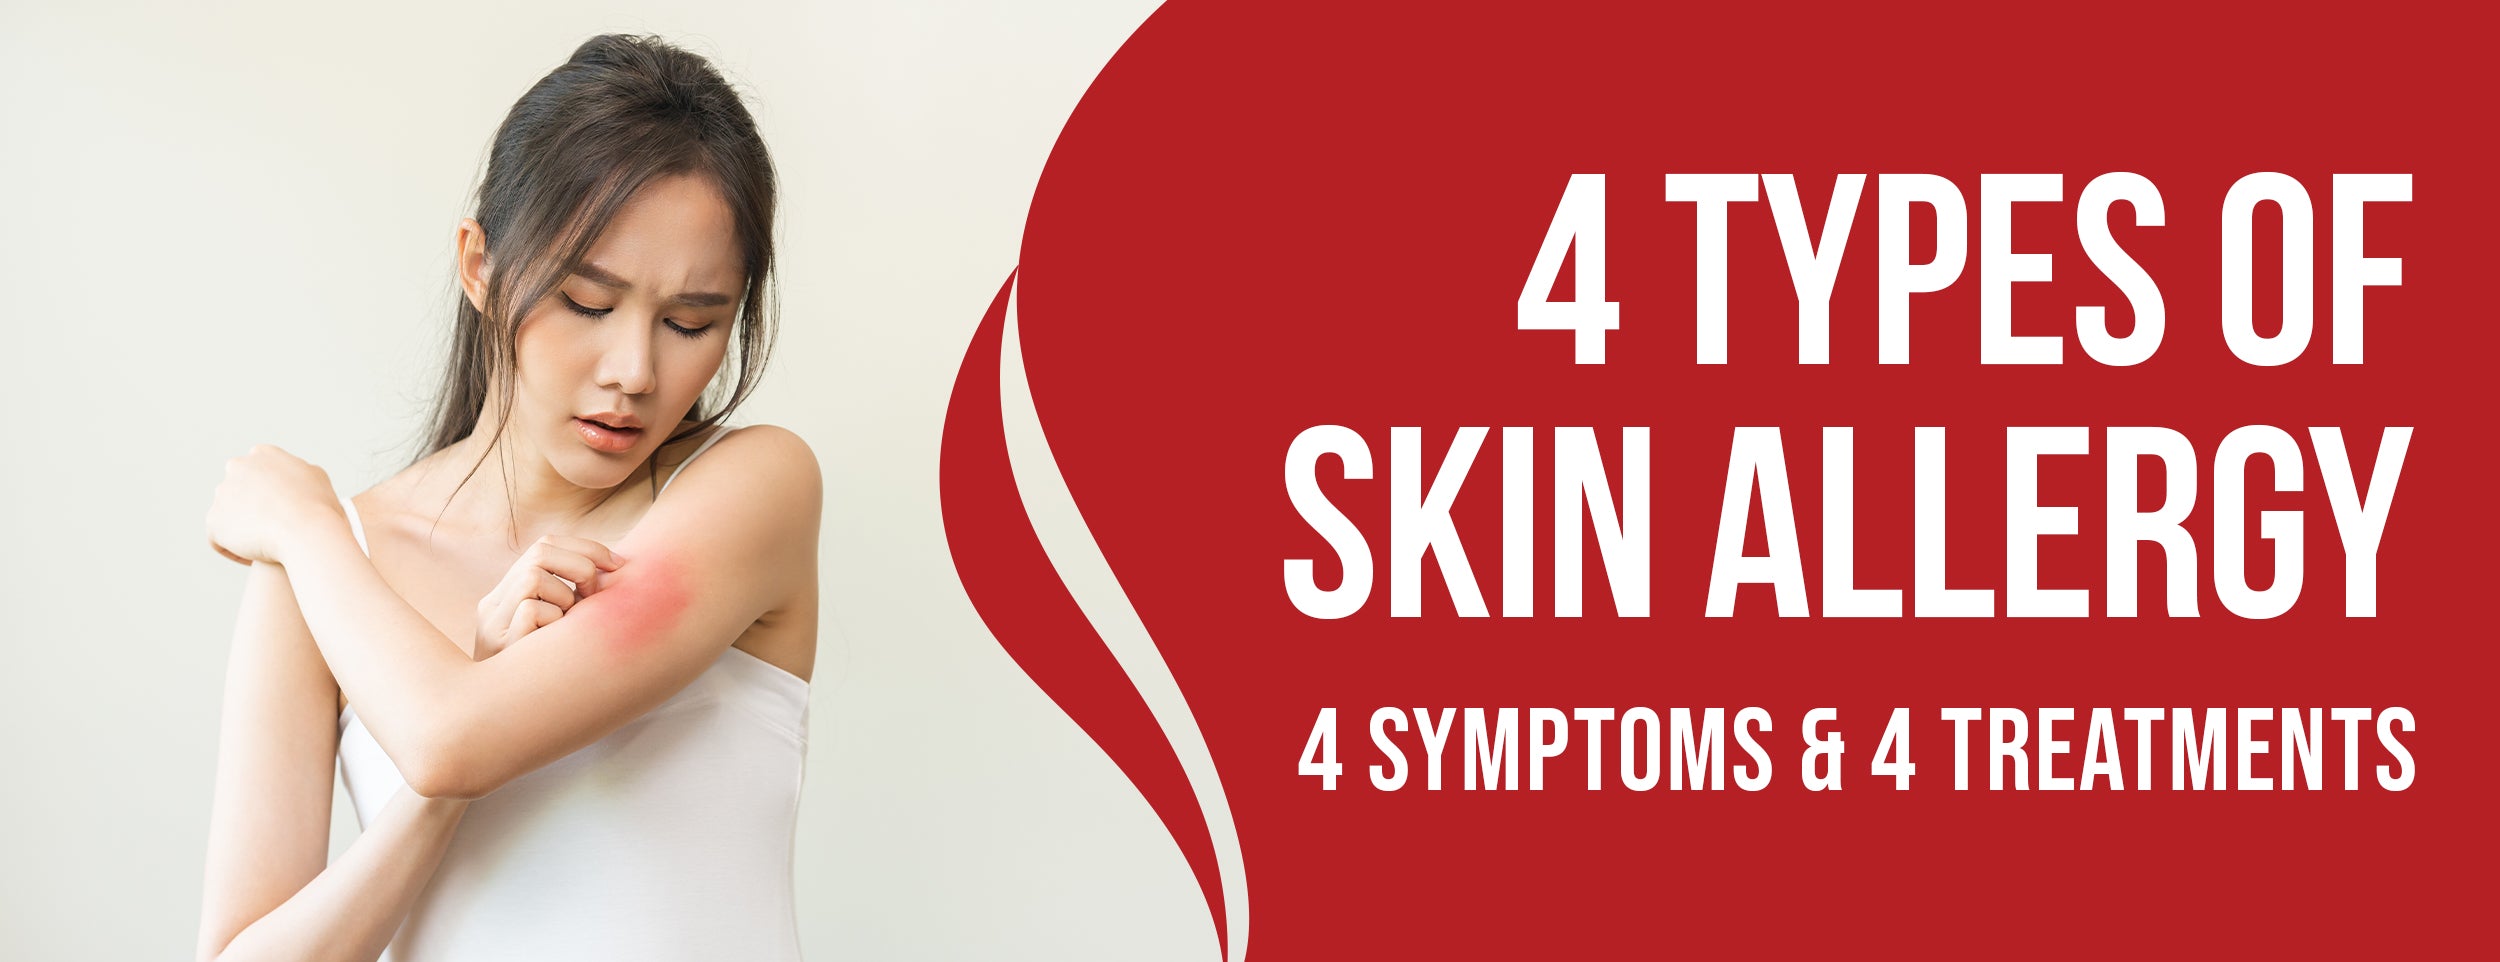 Symptoms & Treatments of Skin Allergies